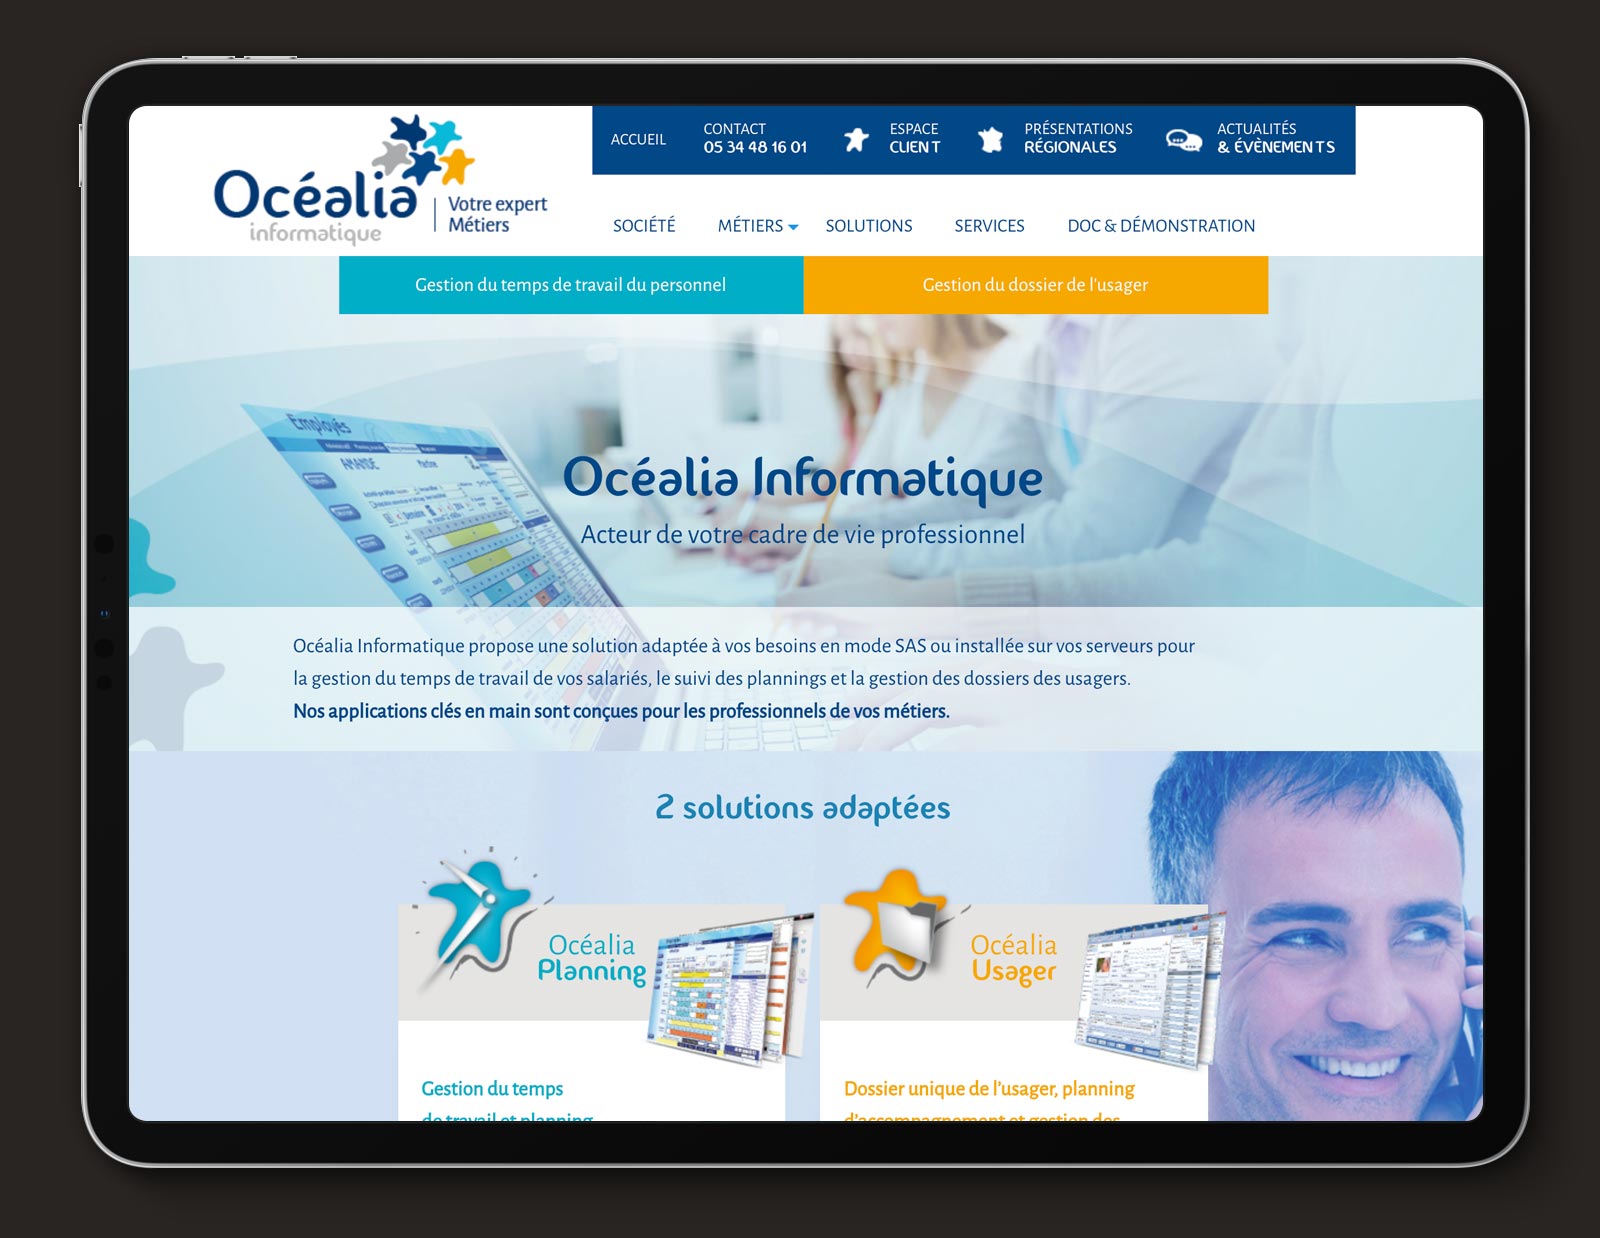 designea-communication-entreprise-site-web-style-corporate-ocealia2.jpg